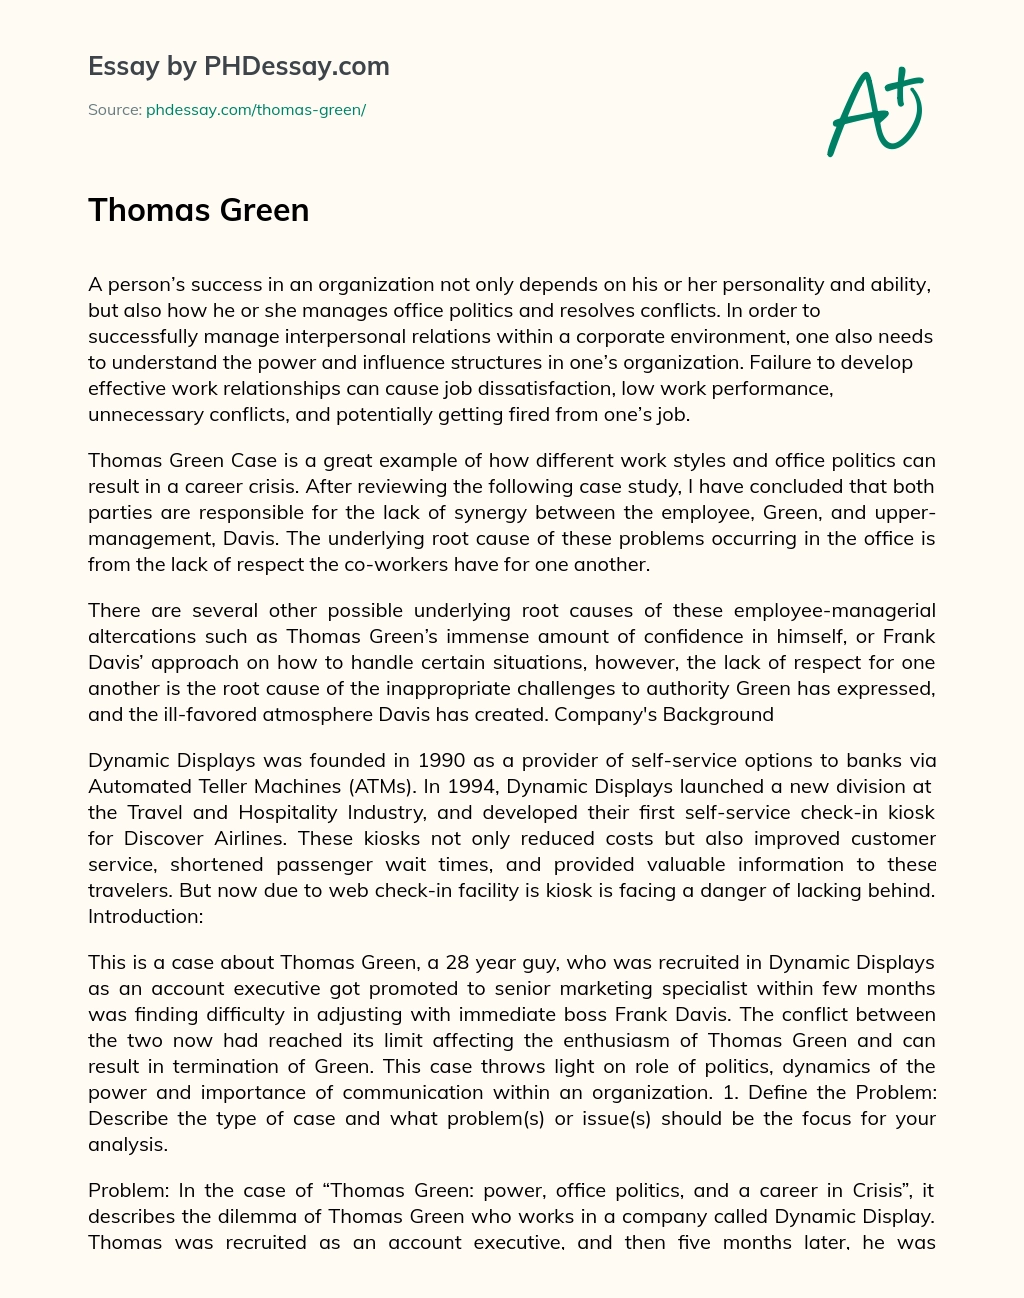 Thomas Green essay